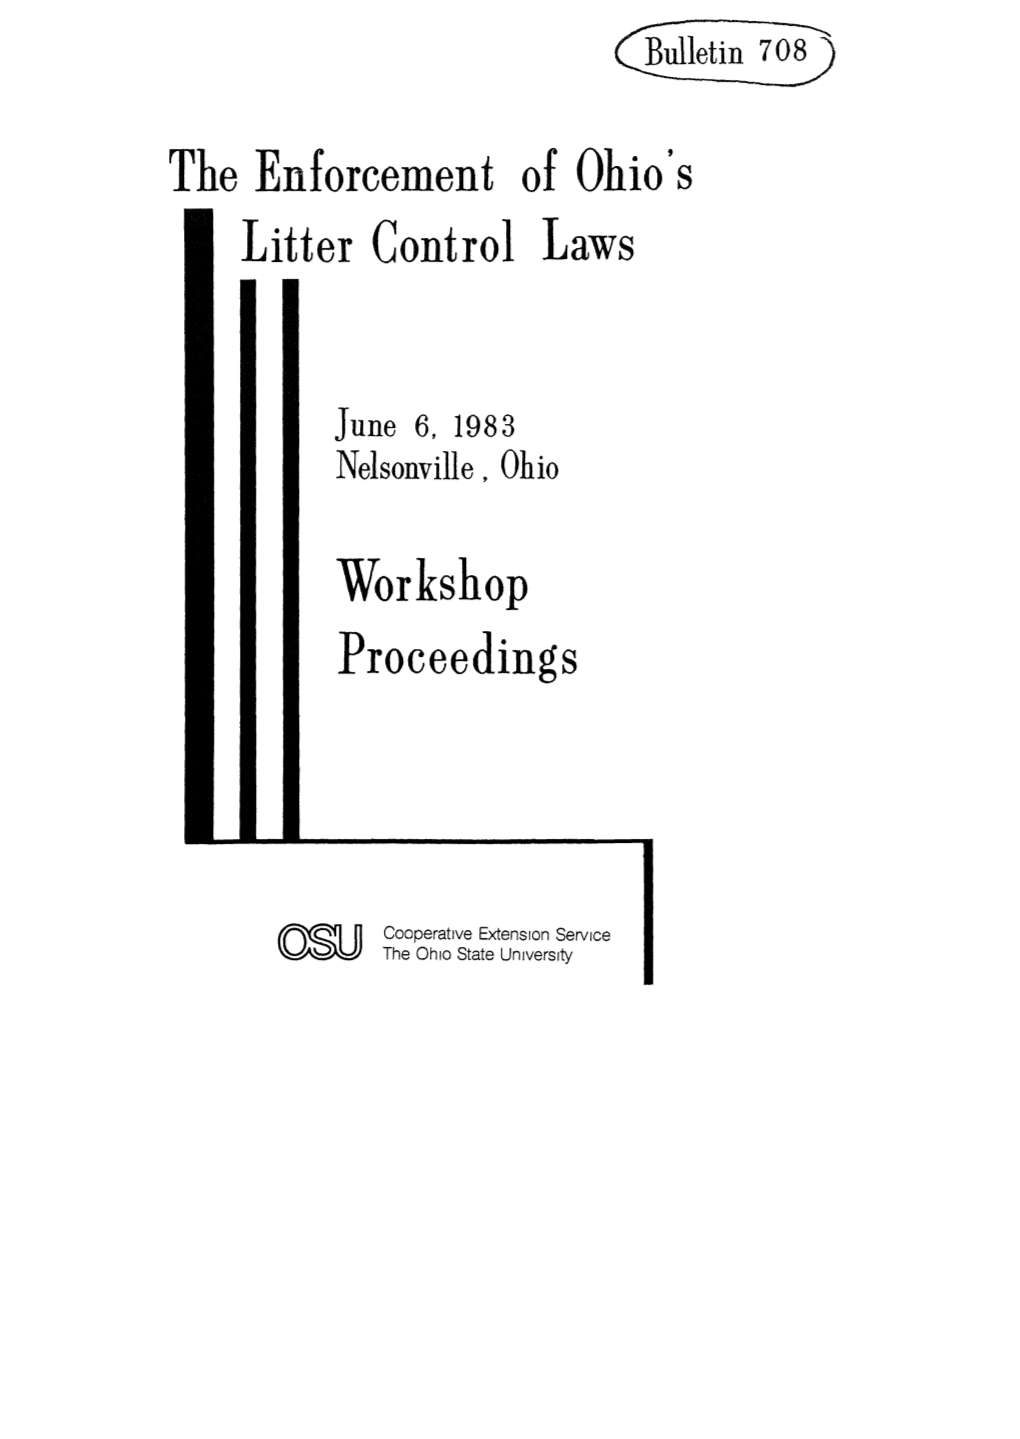 The Enforcement of Ohio's Litter Control Laws Workshop Proceedings